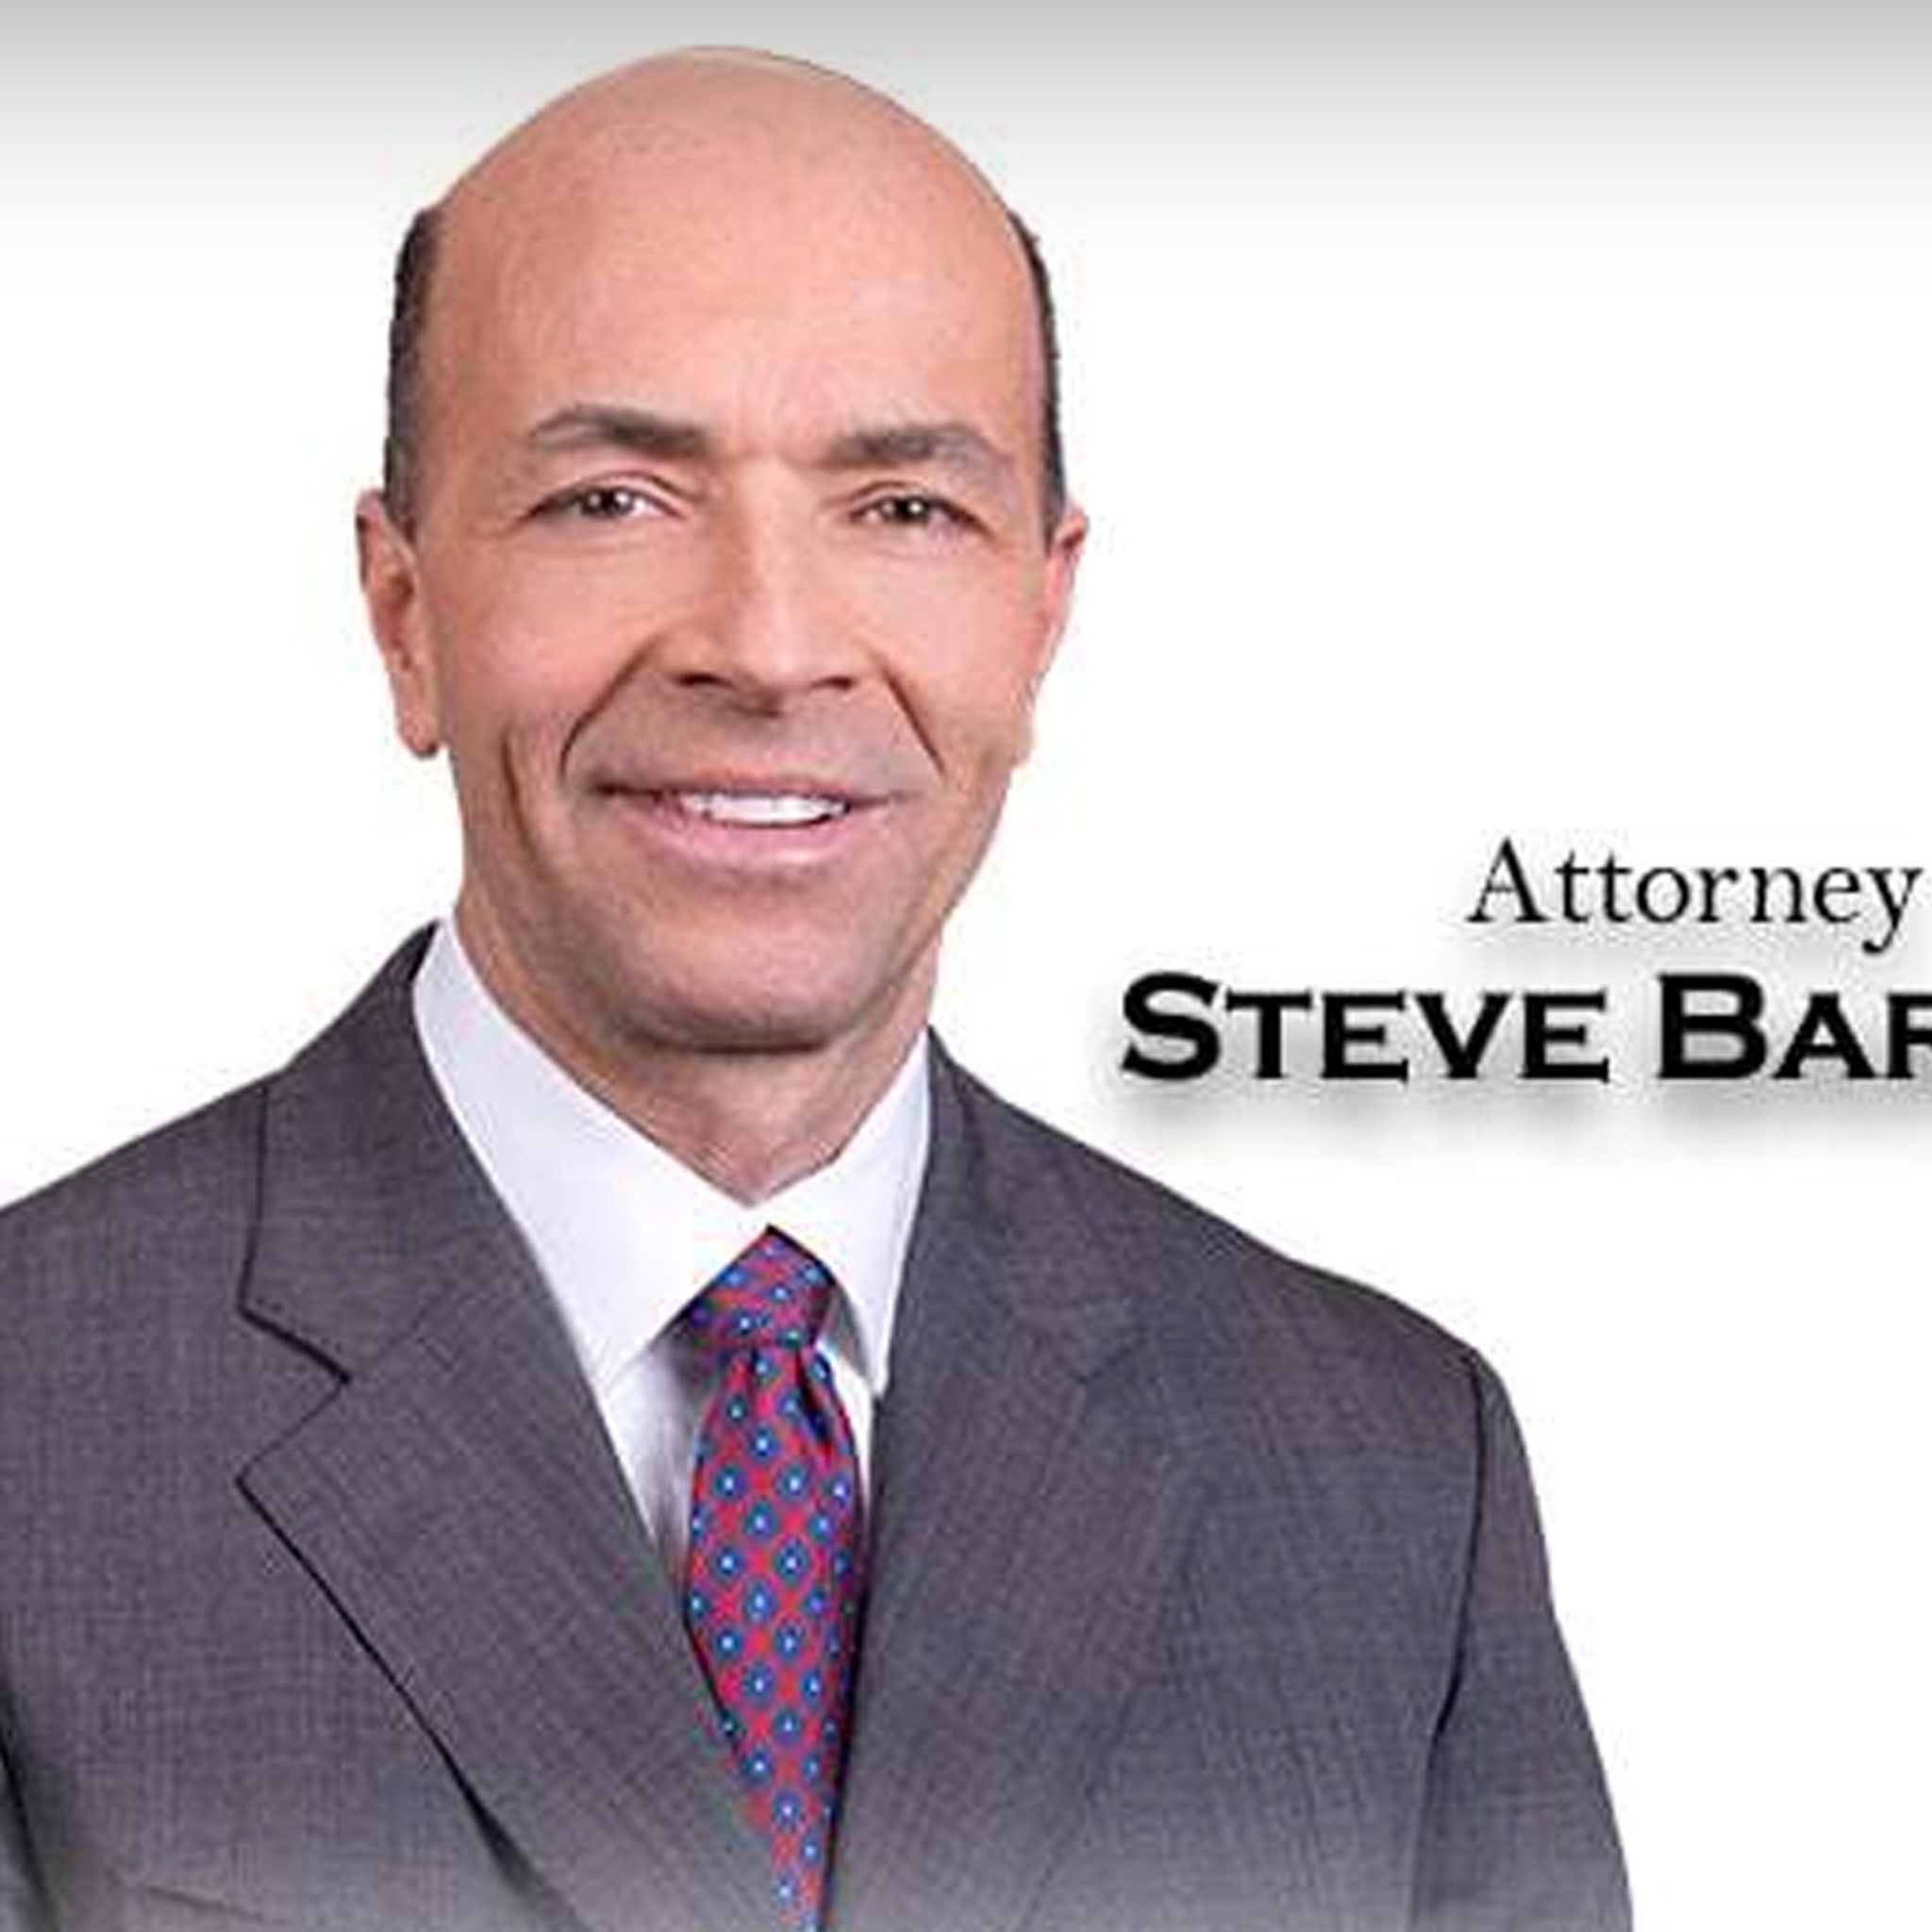 Steve Barnes Of Cellino Barnes Law Firm Reportedly Killed In Plane Crash